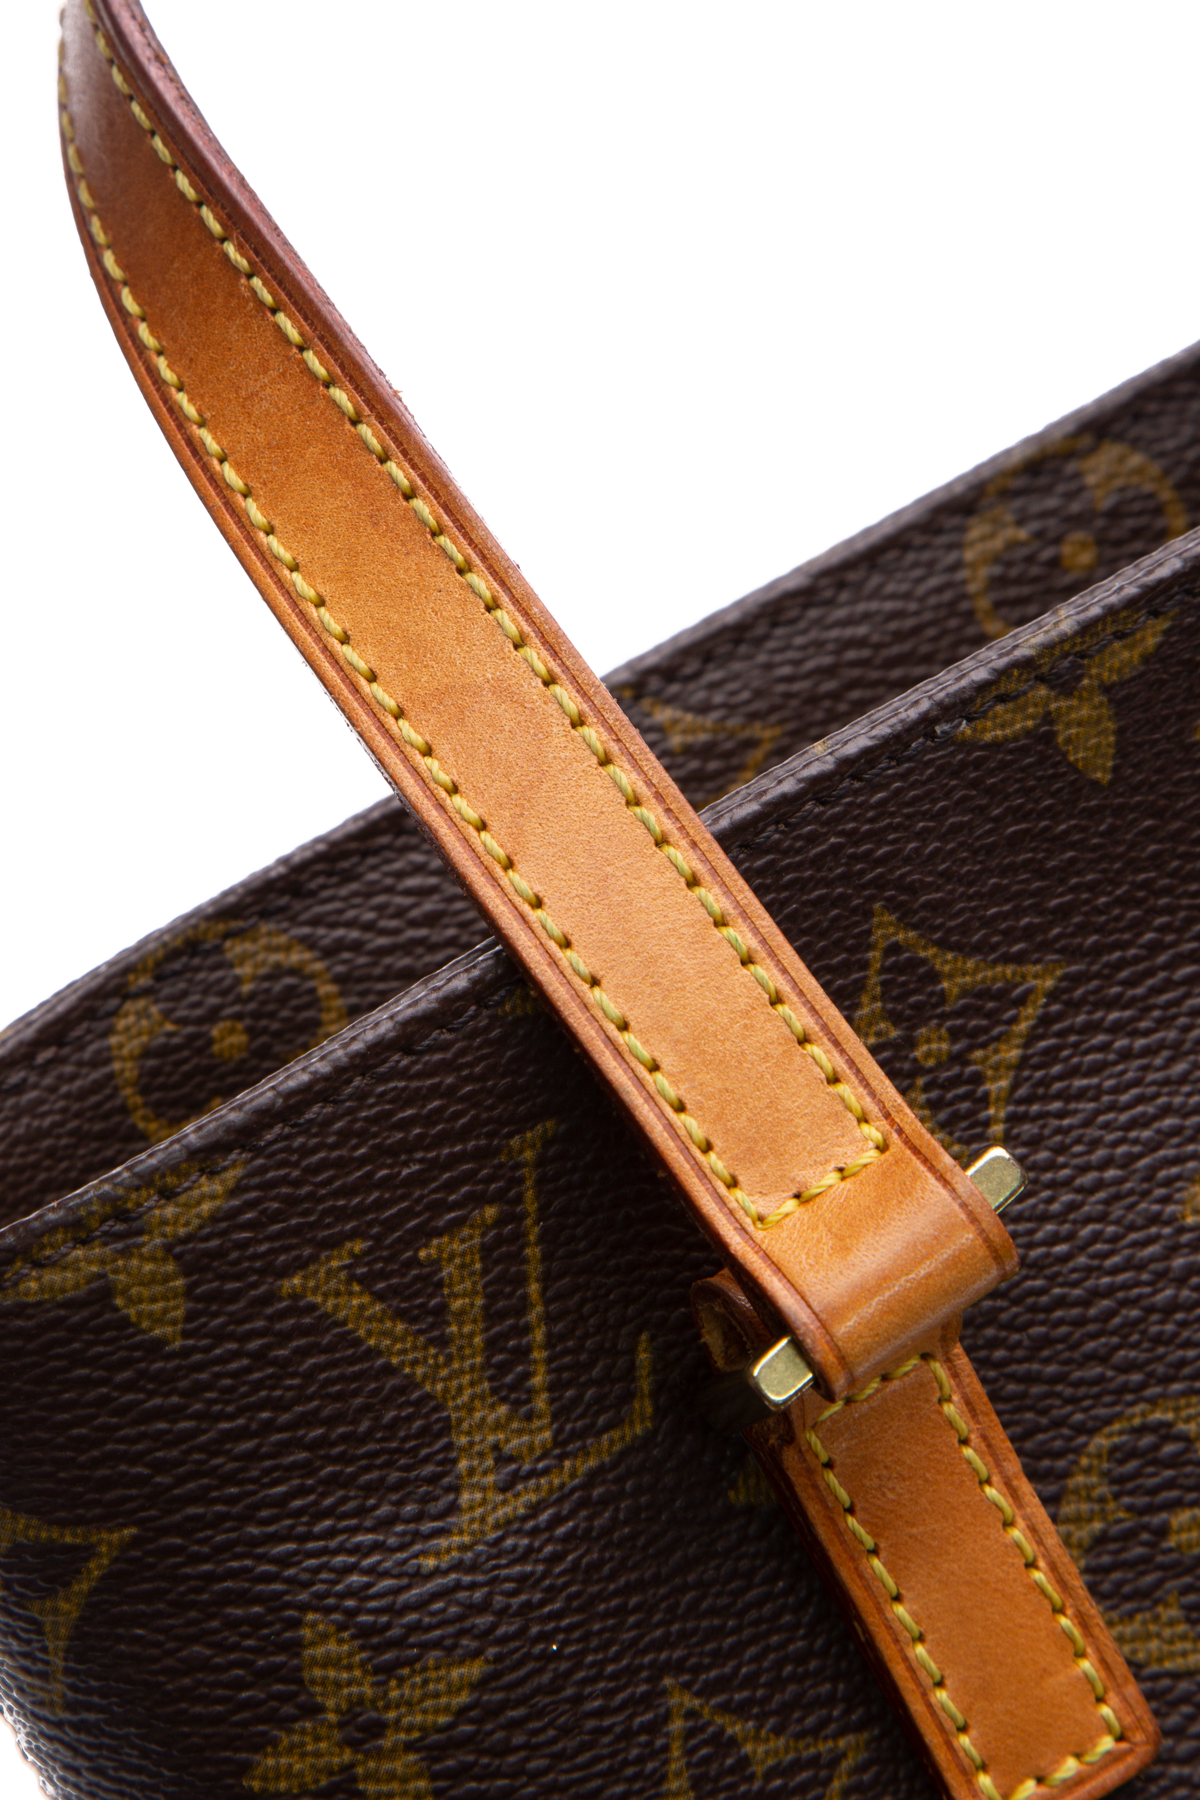 Louis Vuitton - Vintage *LV LUCO GM* Inspired Tote/Shoulder Bag on